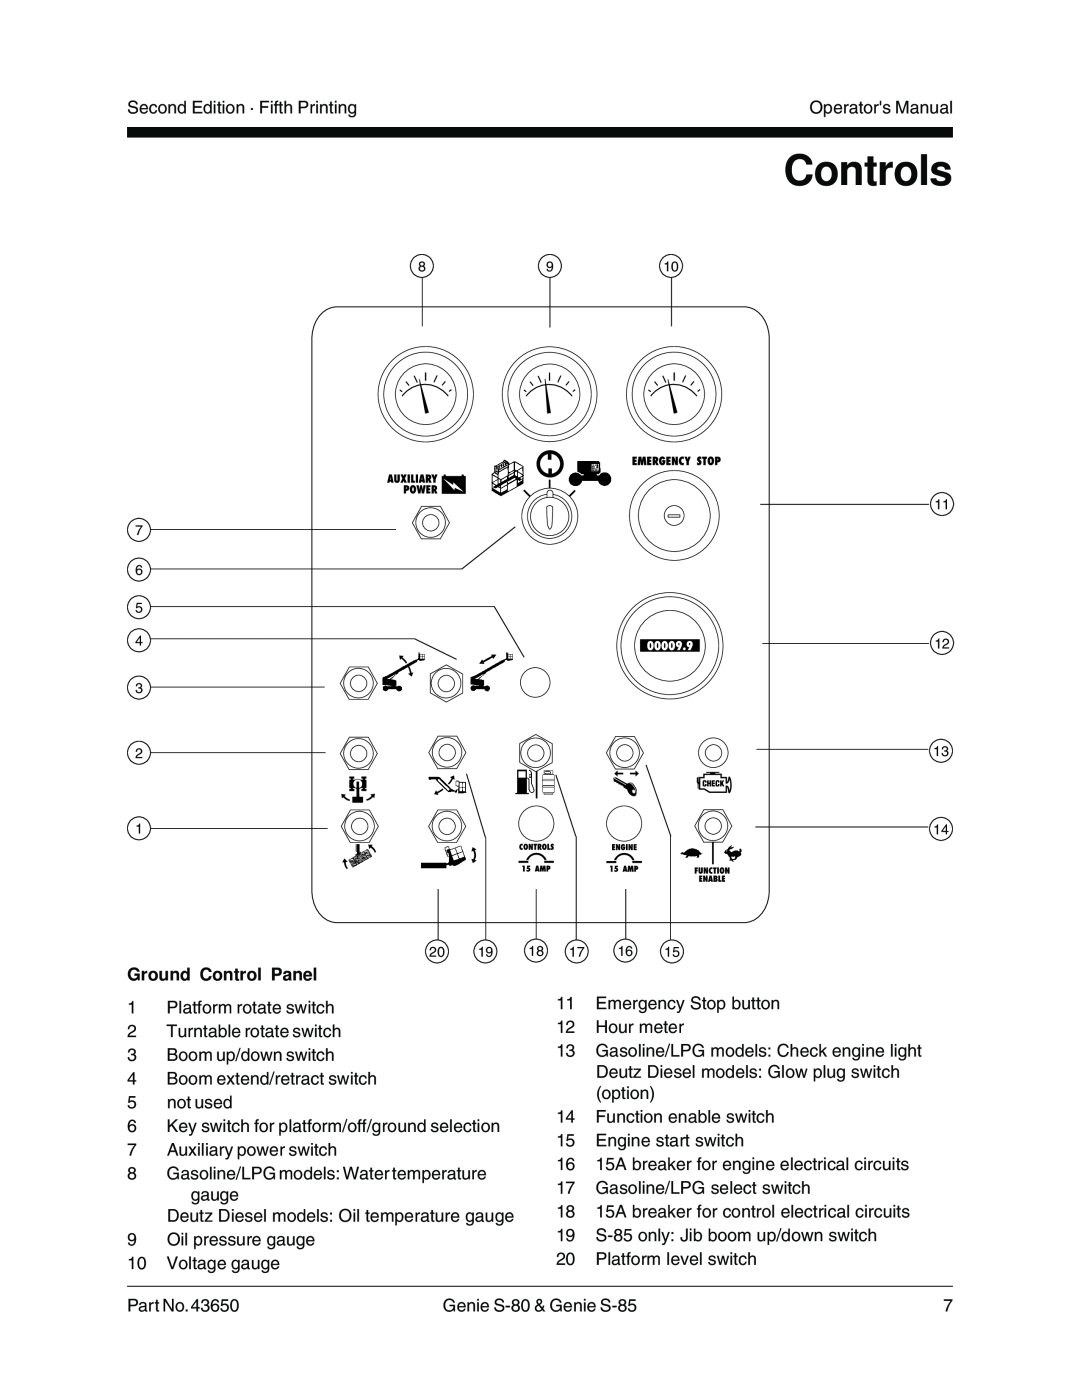 Genie S-80, S-85, 43650 manual Controls, Ground Control Panel 